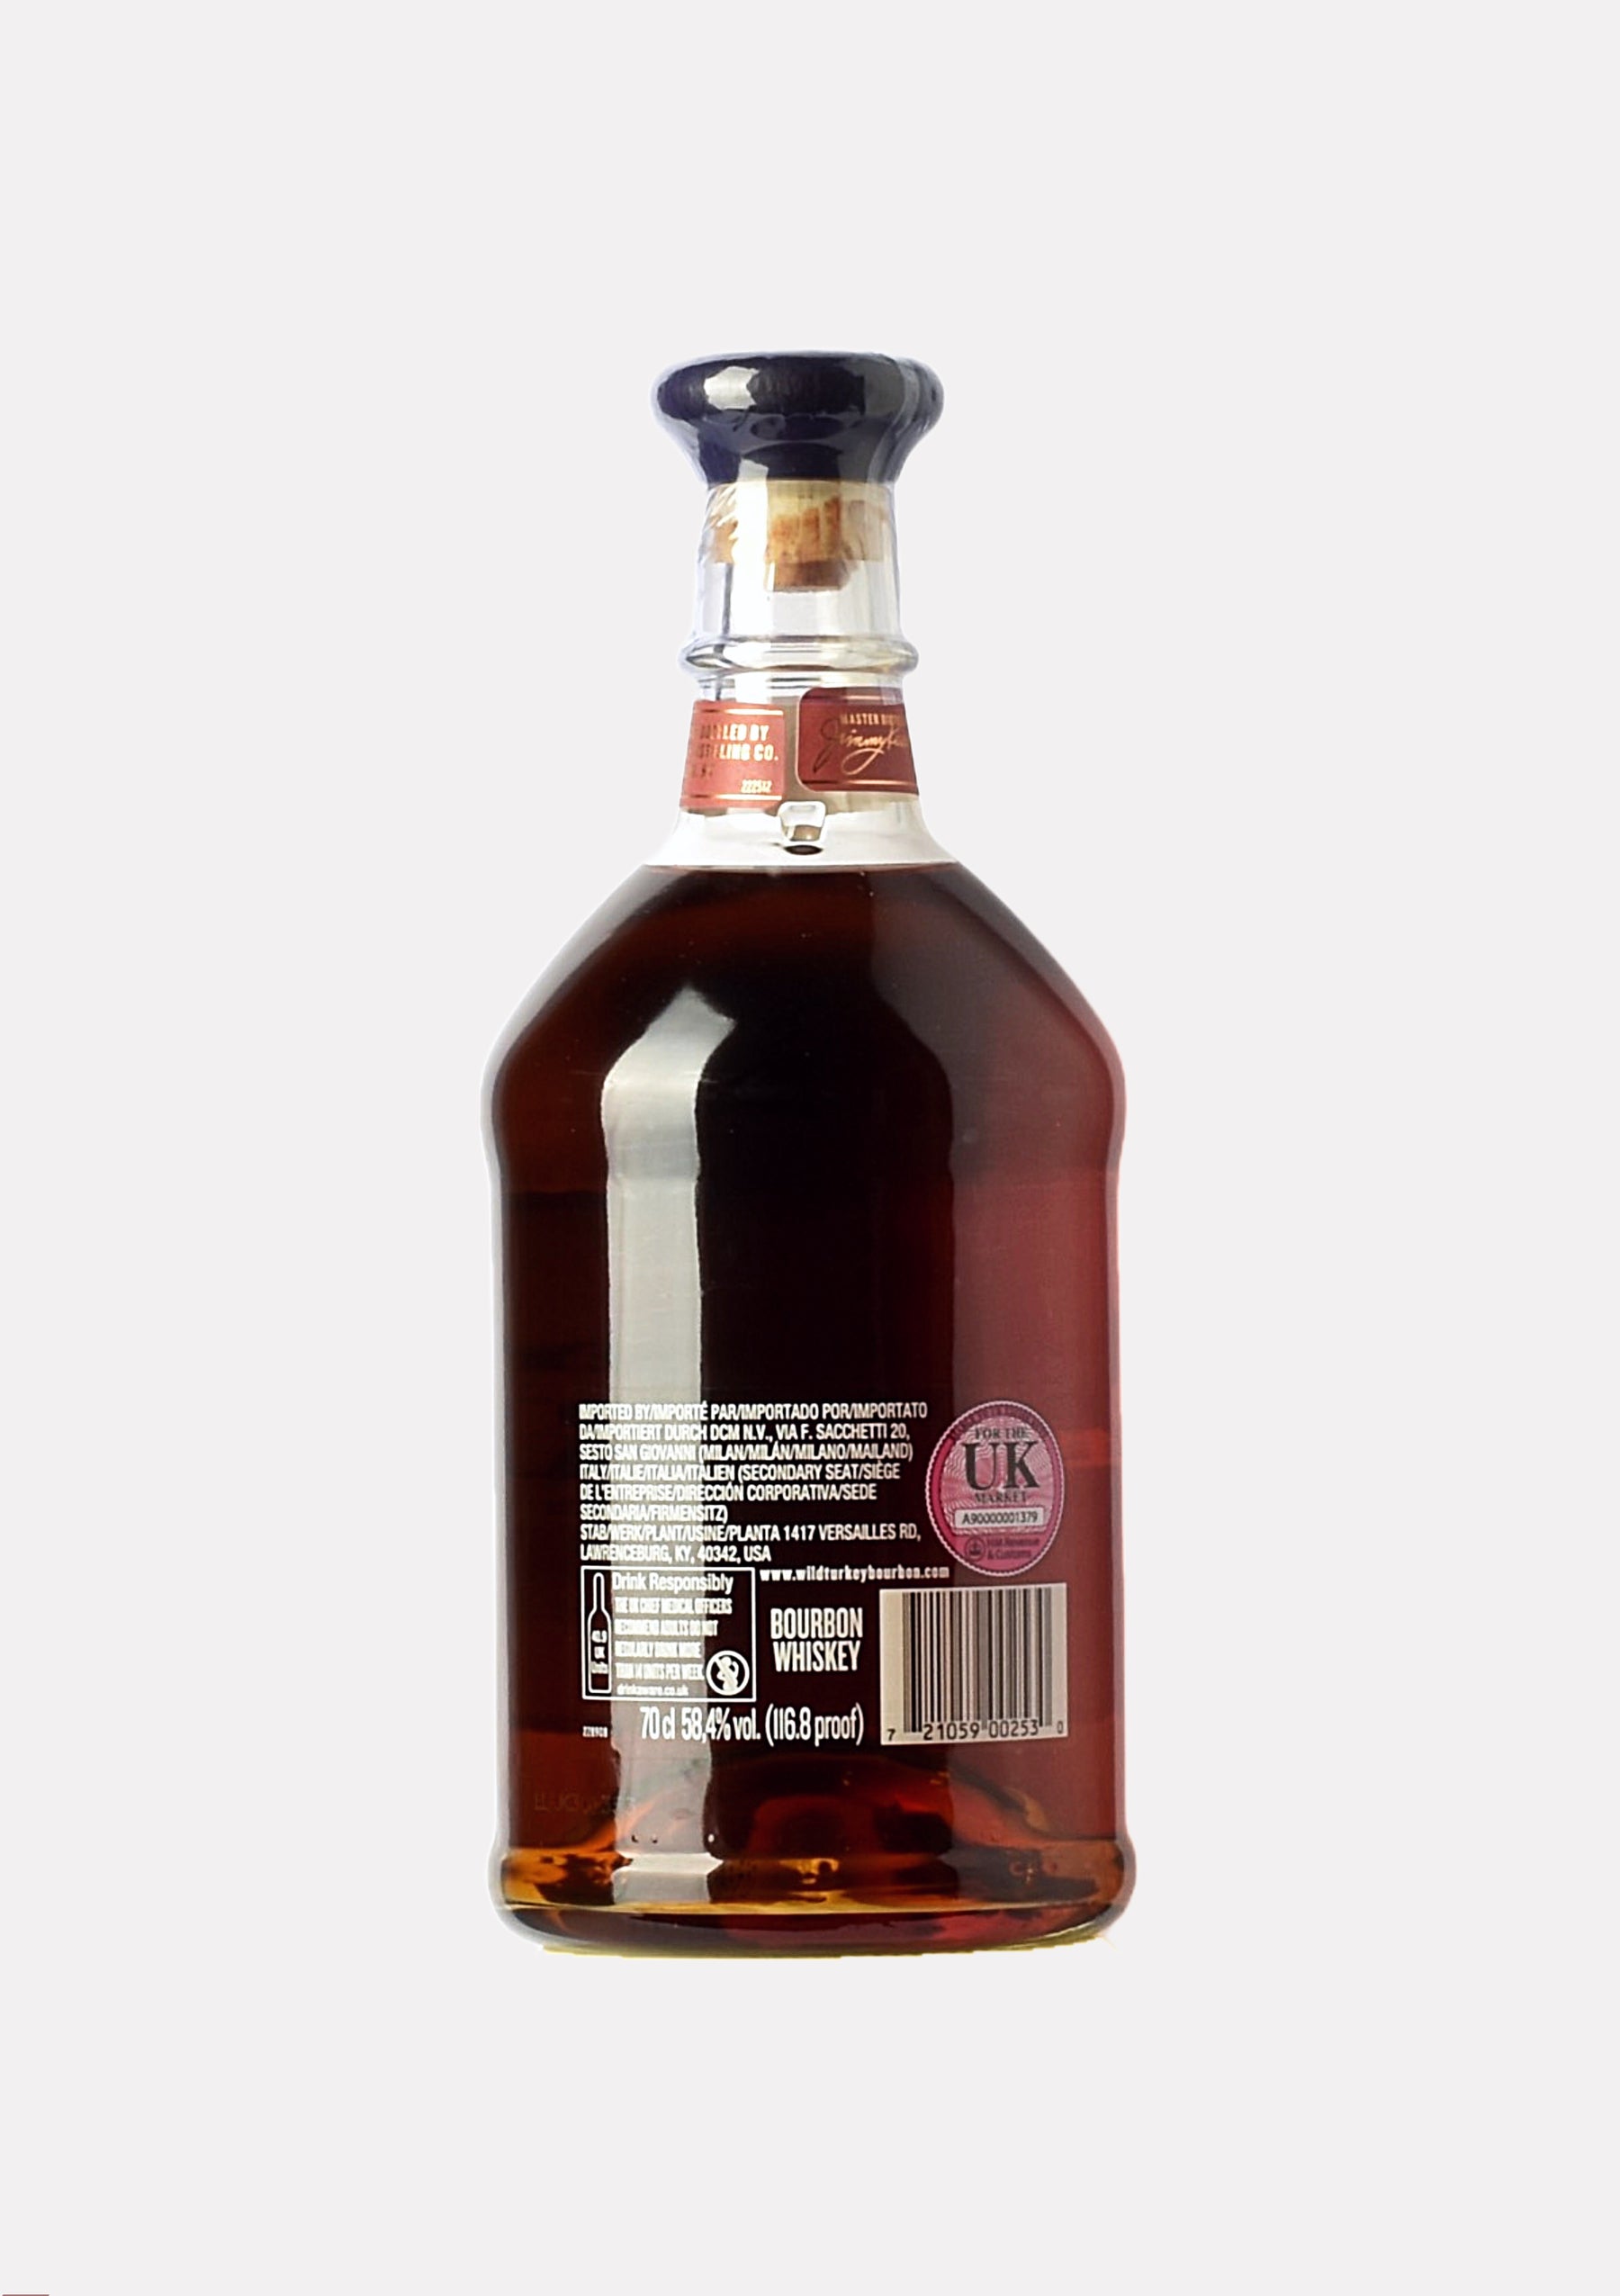 Wild Turkey Rare Breed Barrel Proof Kentucky Straight Bourbon Whiskey 116.8 Proof 2017